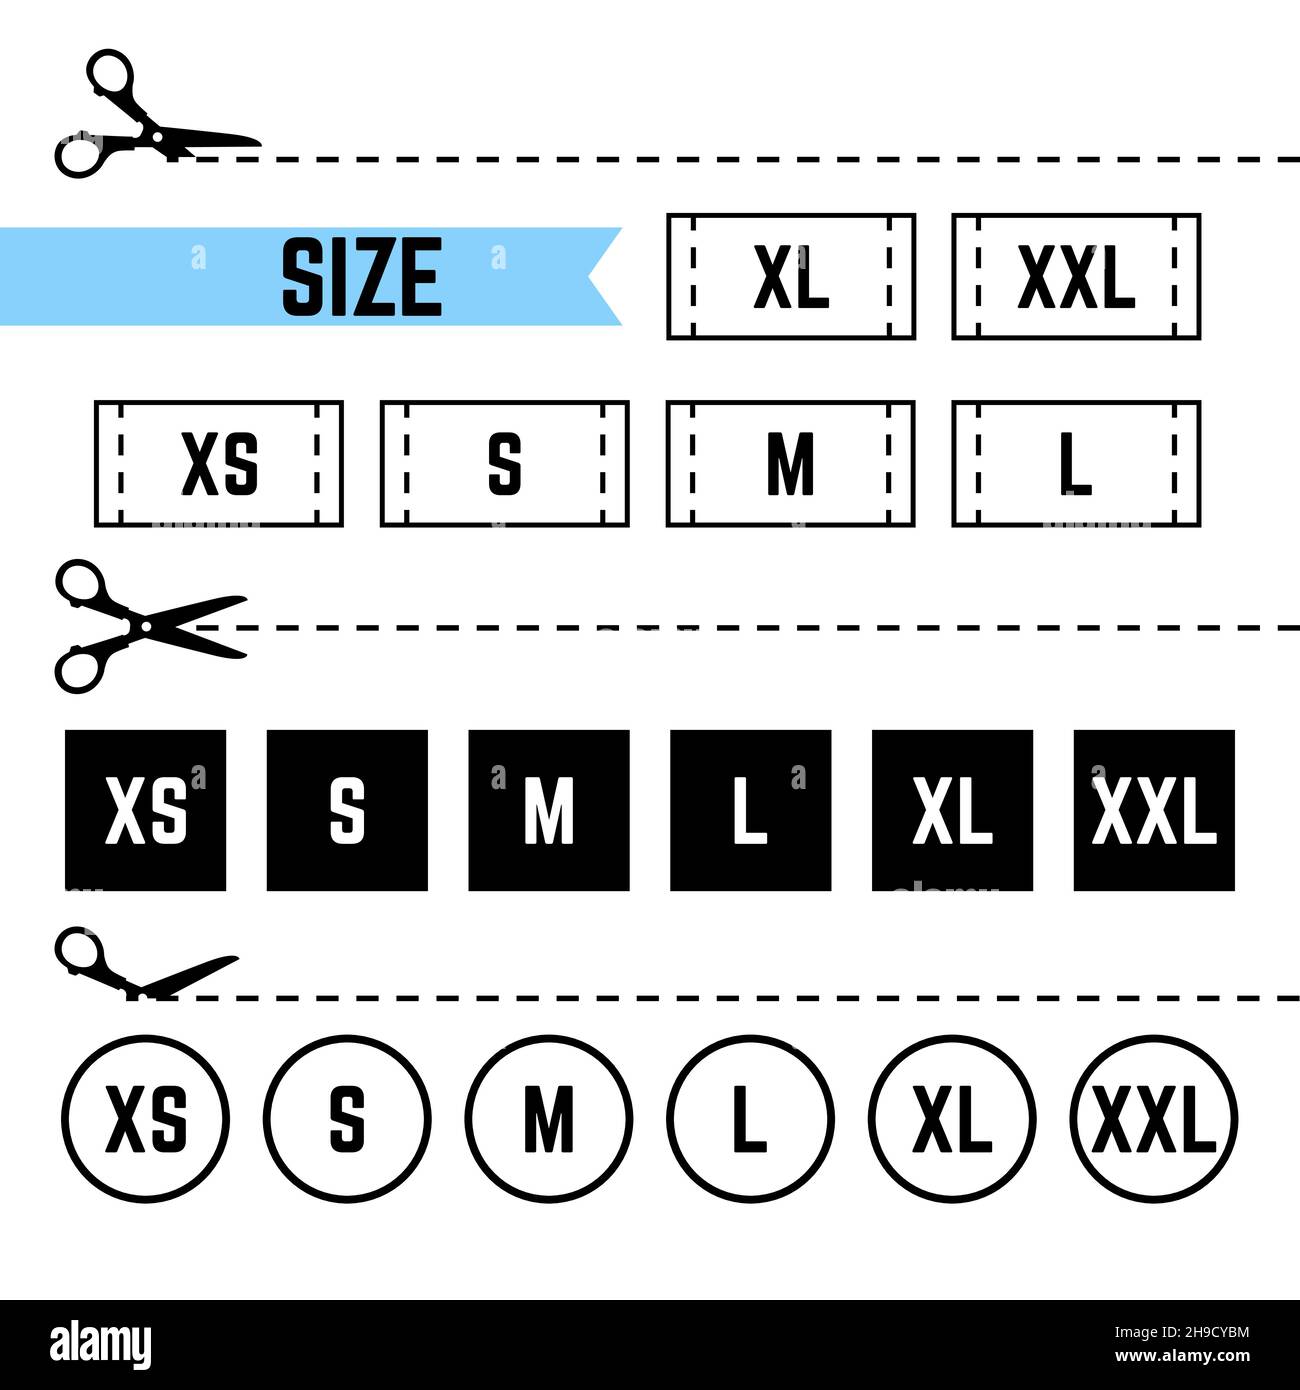 Clothing sizes labels Symbols XS, S, M, L, XL, XXL Stock Vector Image & Art  - Alamy